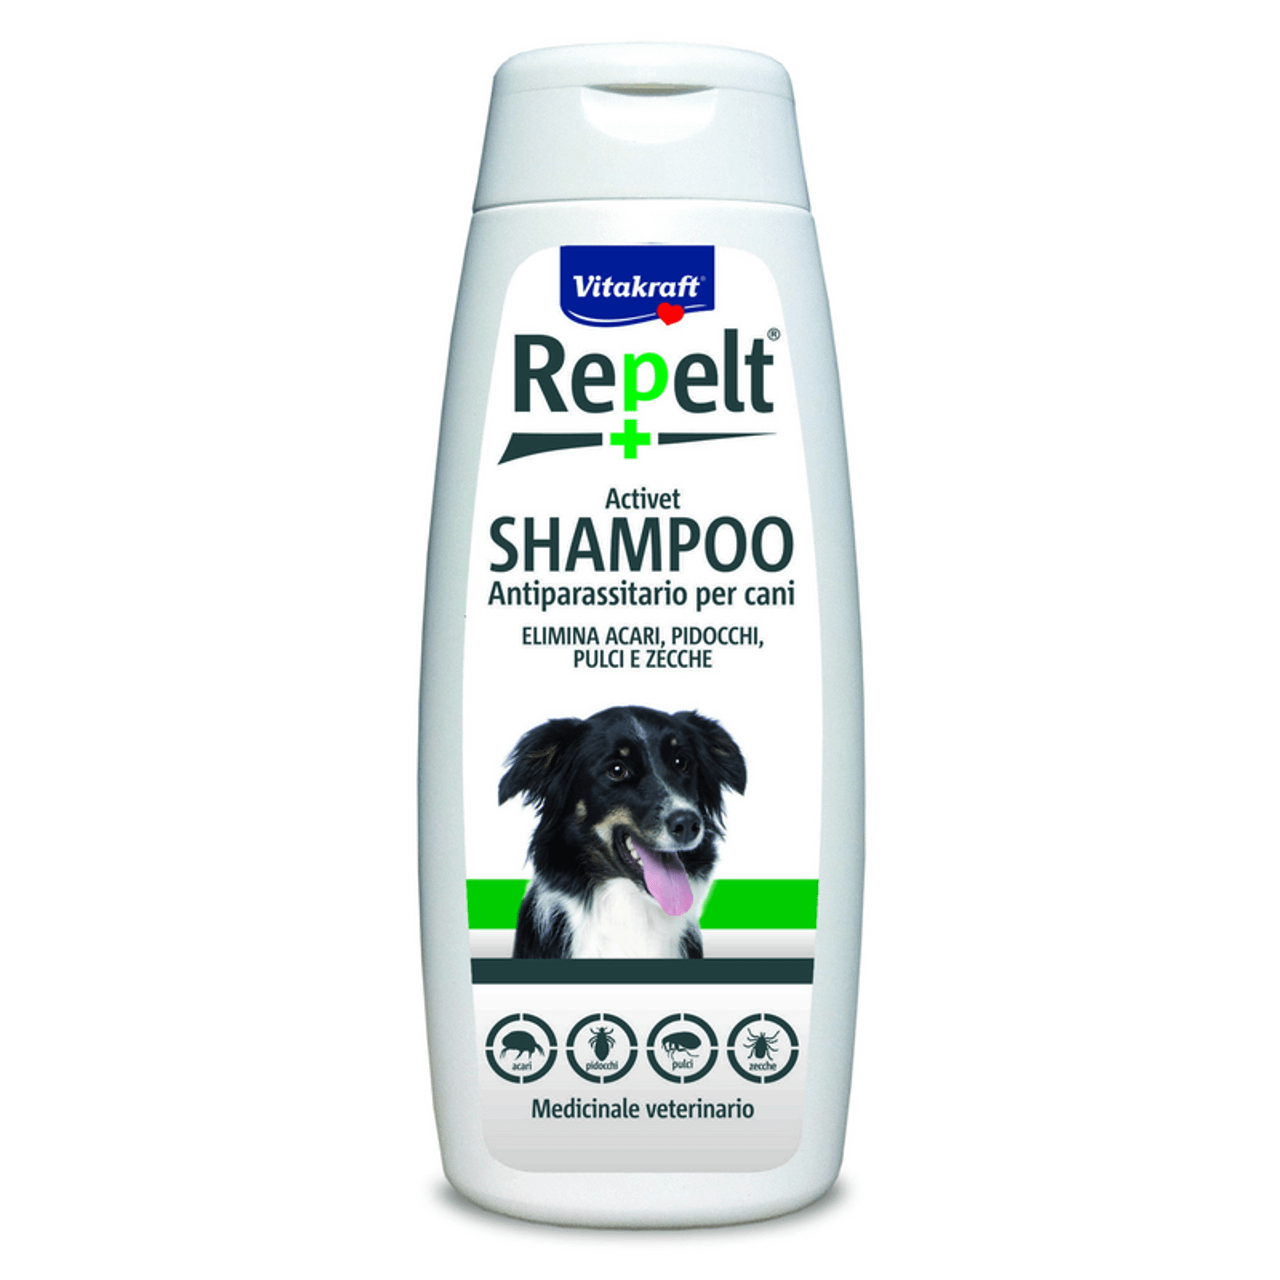 Vitakraft Repelt Shampoo Antiparassitario per Cani, 250ml